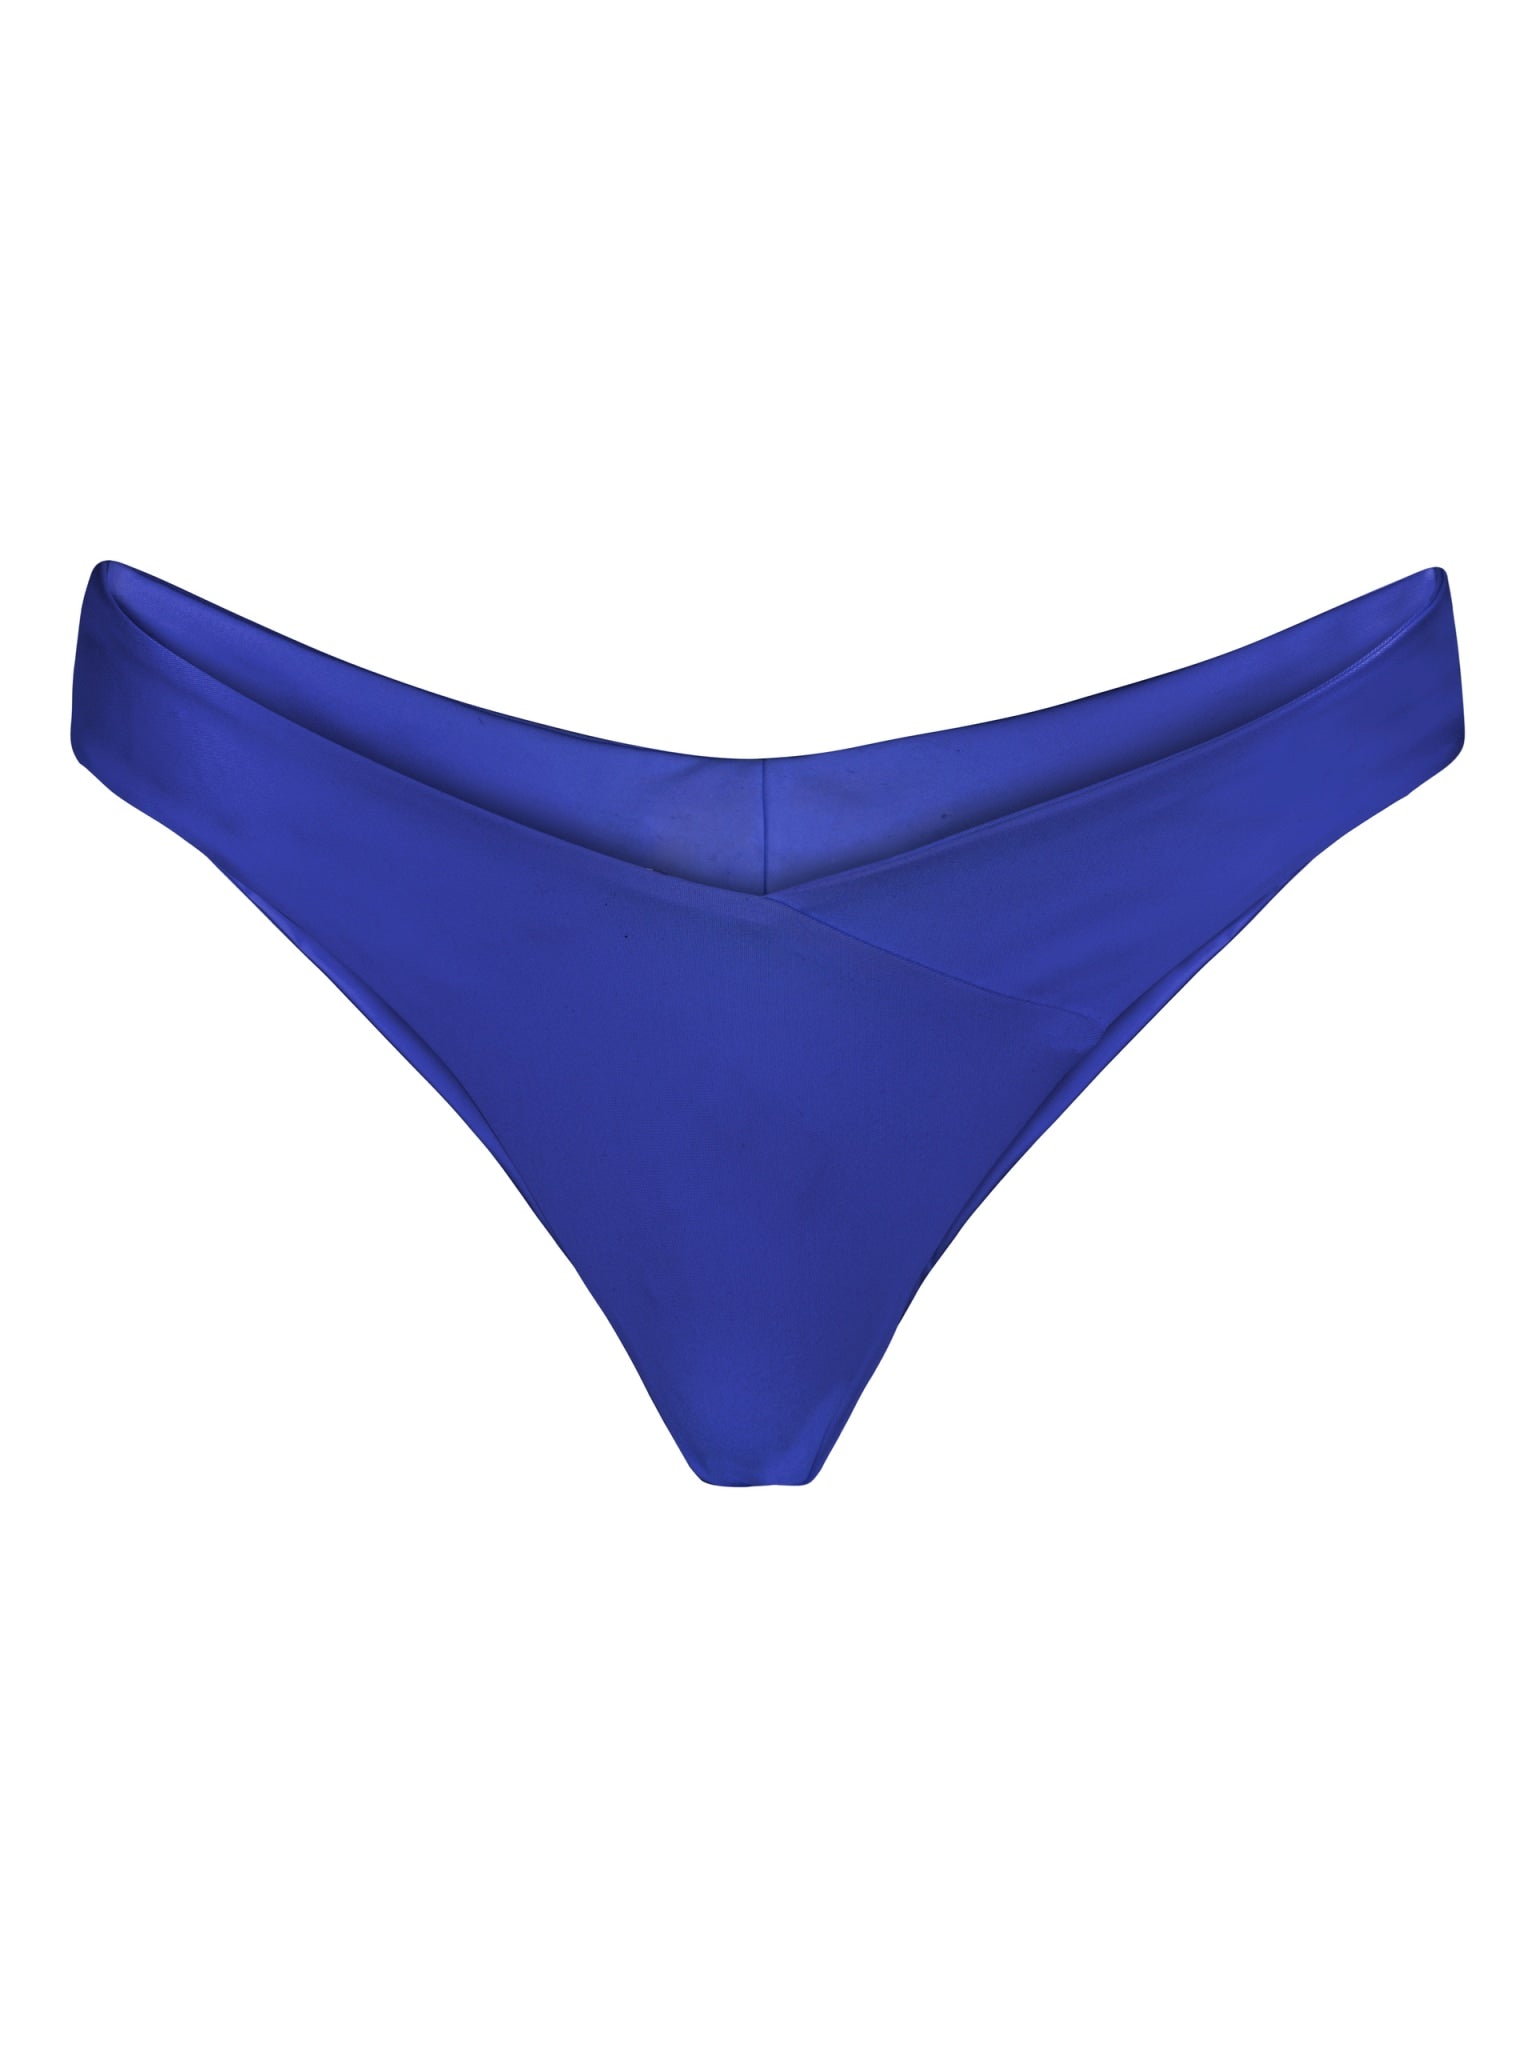 Canggu v-shape bikini bottom - Cartel Blue